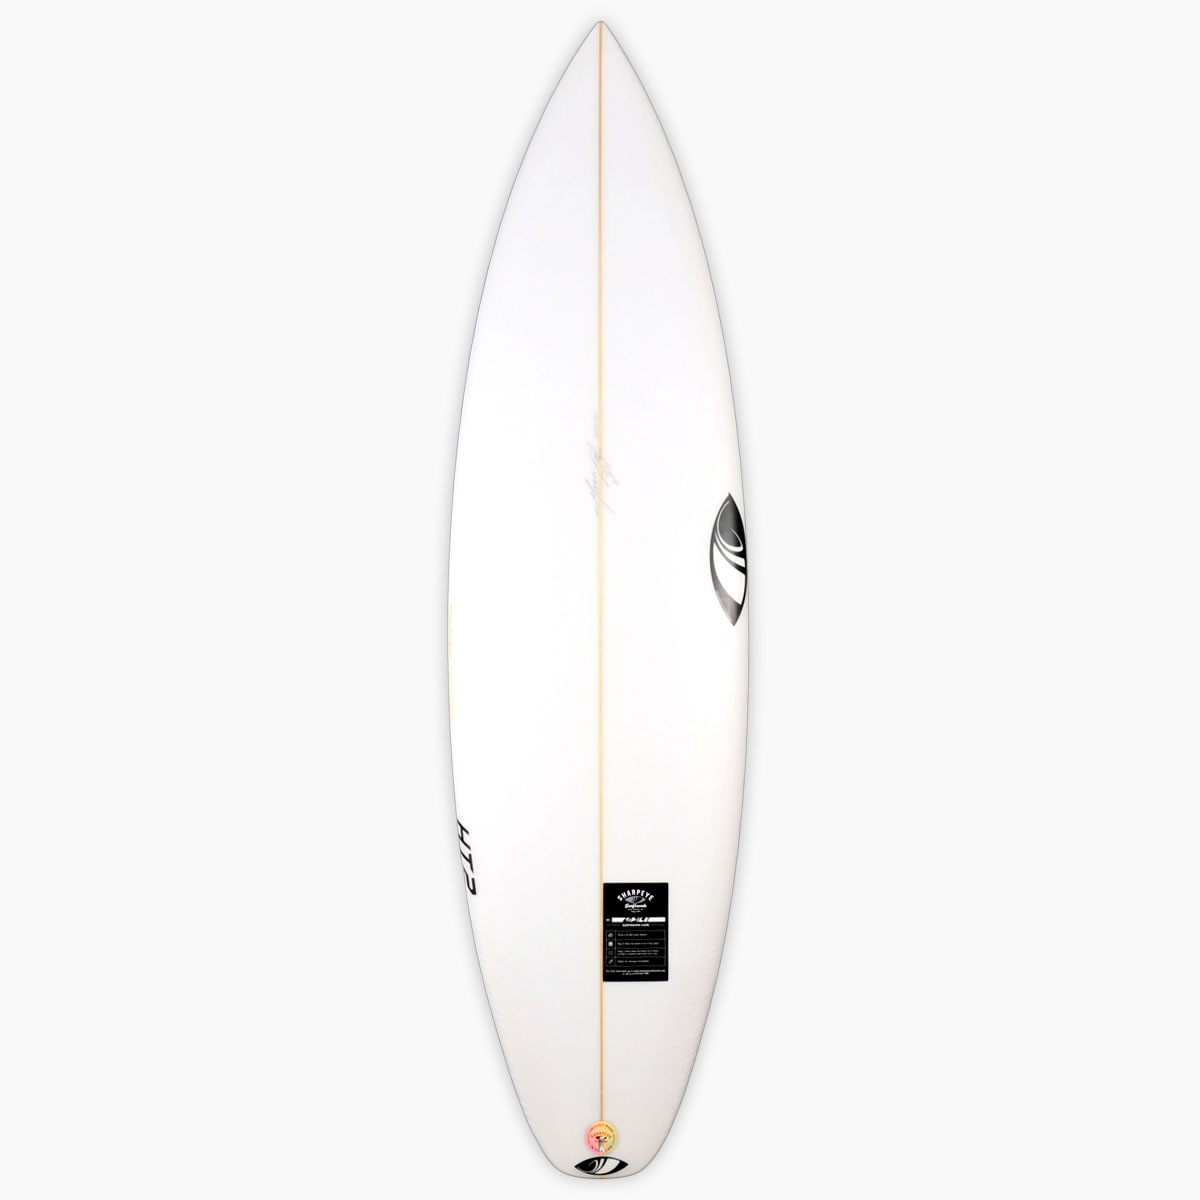 SurfBoardNet / サーフボード ブランド:SHARP EYE SURFBOARDS